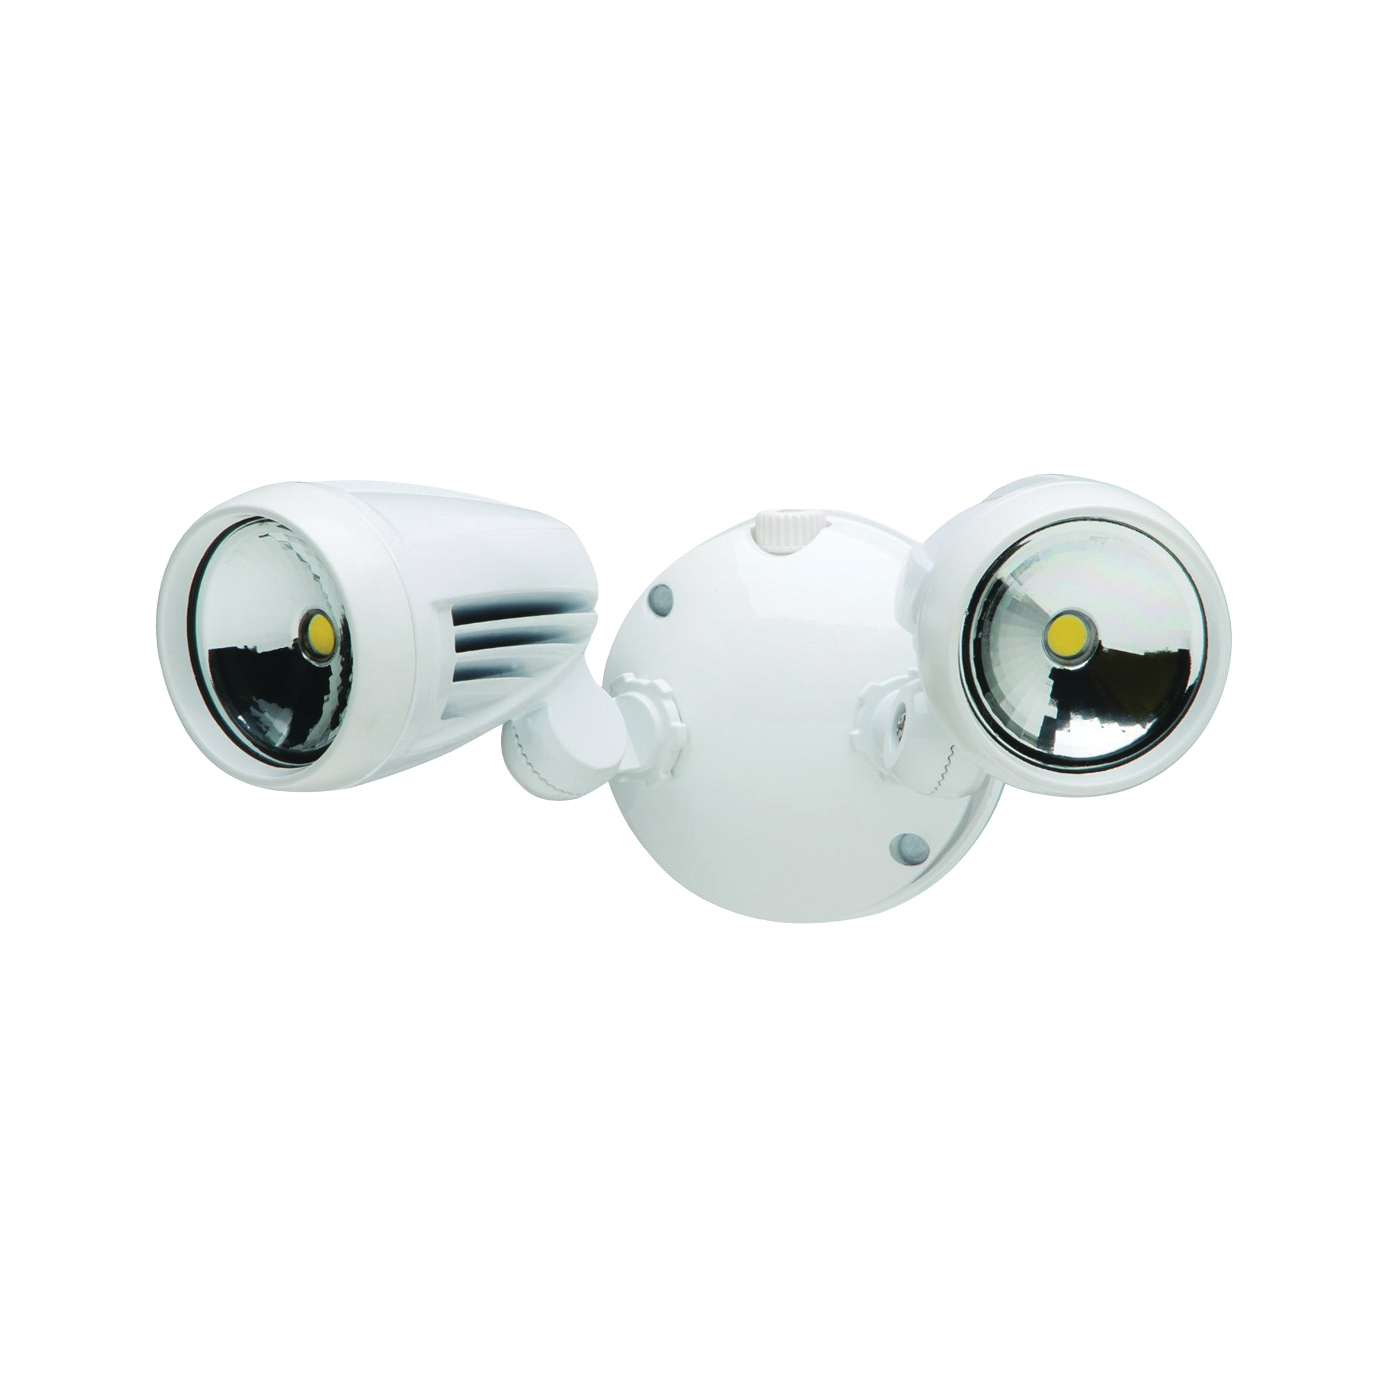 HZ-8485-WH-A Non-Motion Security Light, 120 V, 2-Lamp, LED Lamp, 5000 K Color Temp